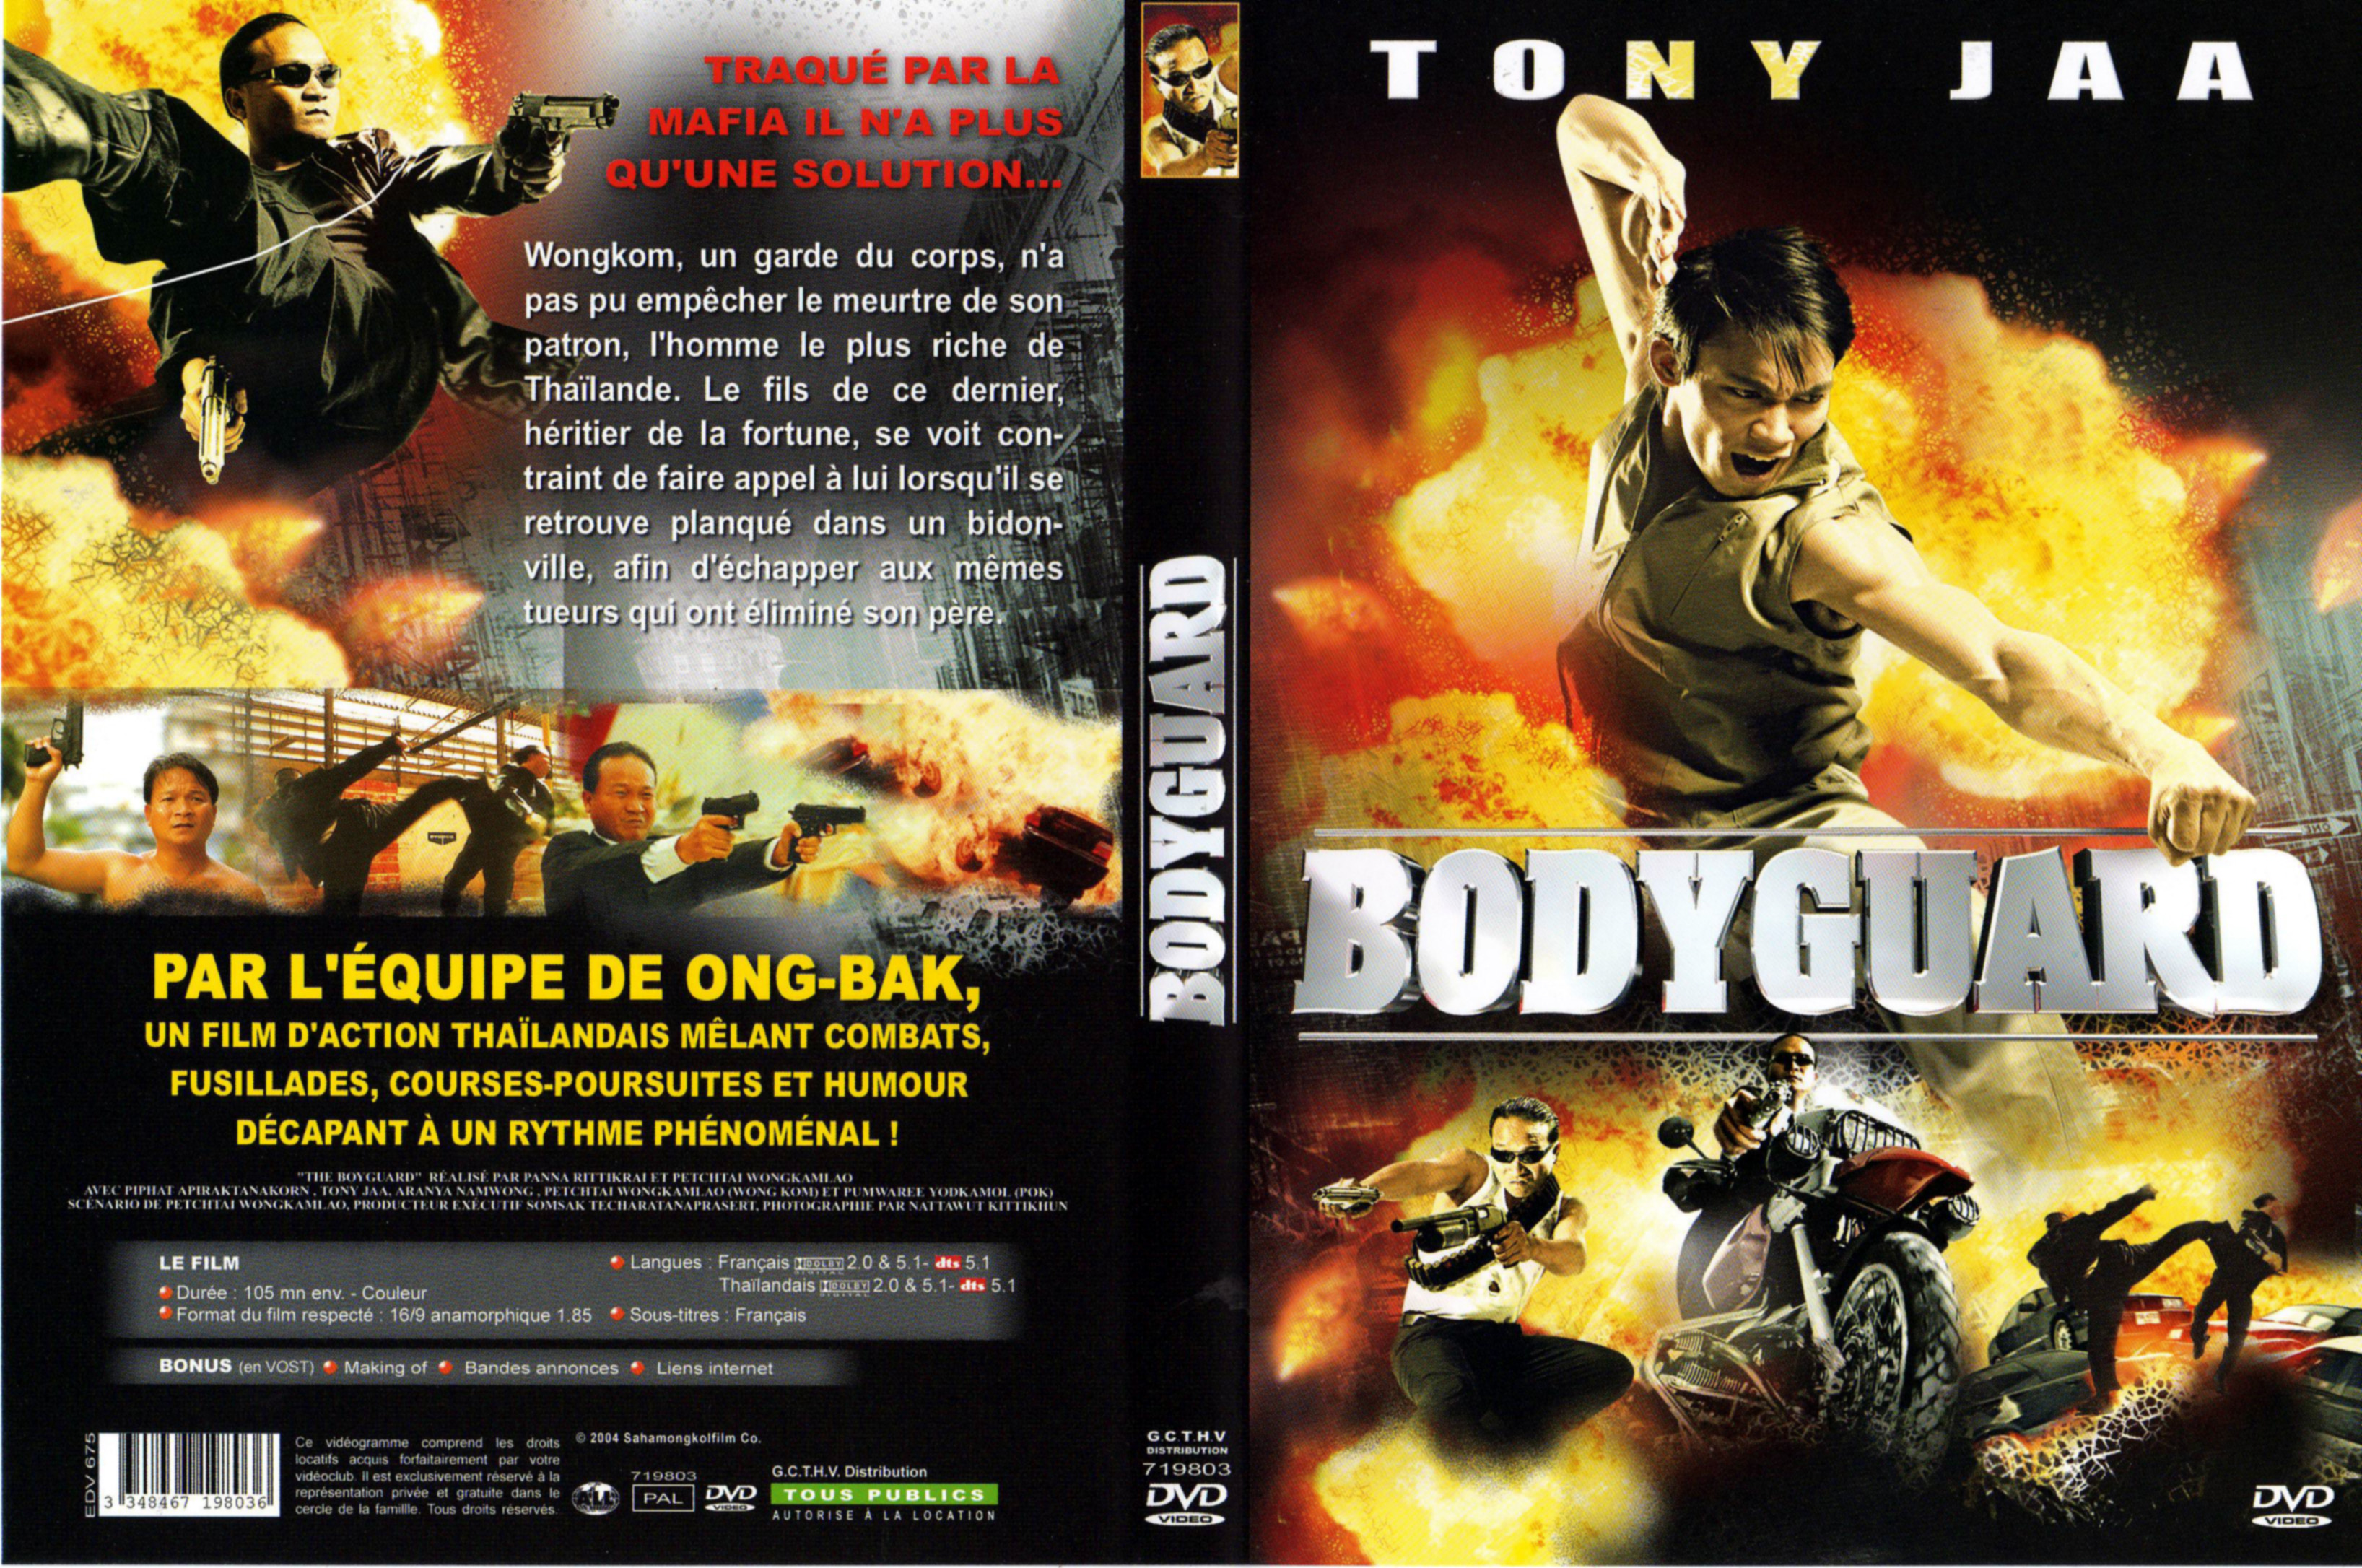 Jaquette DVD Bodyguard (Tony Jaa)